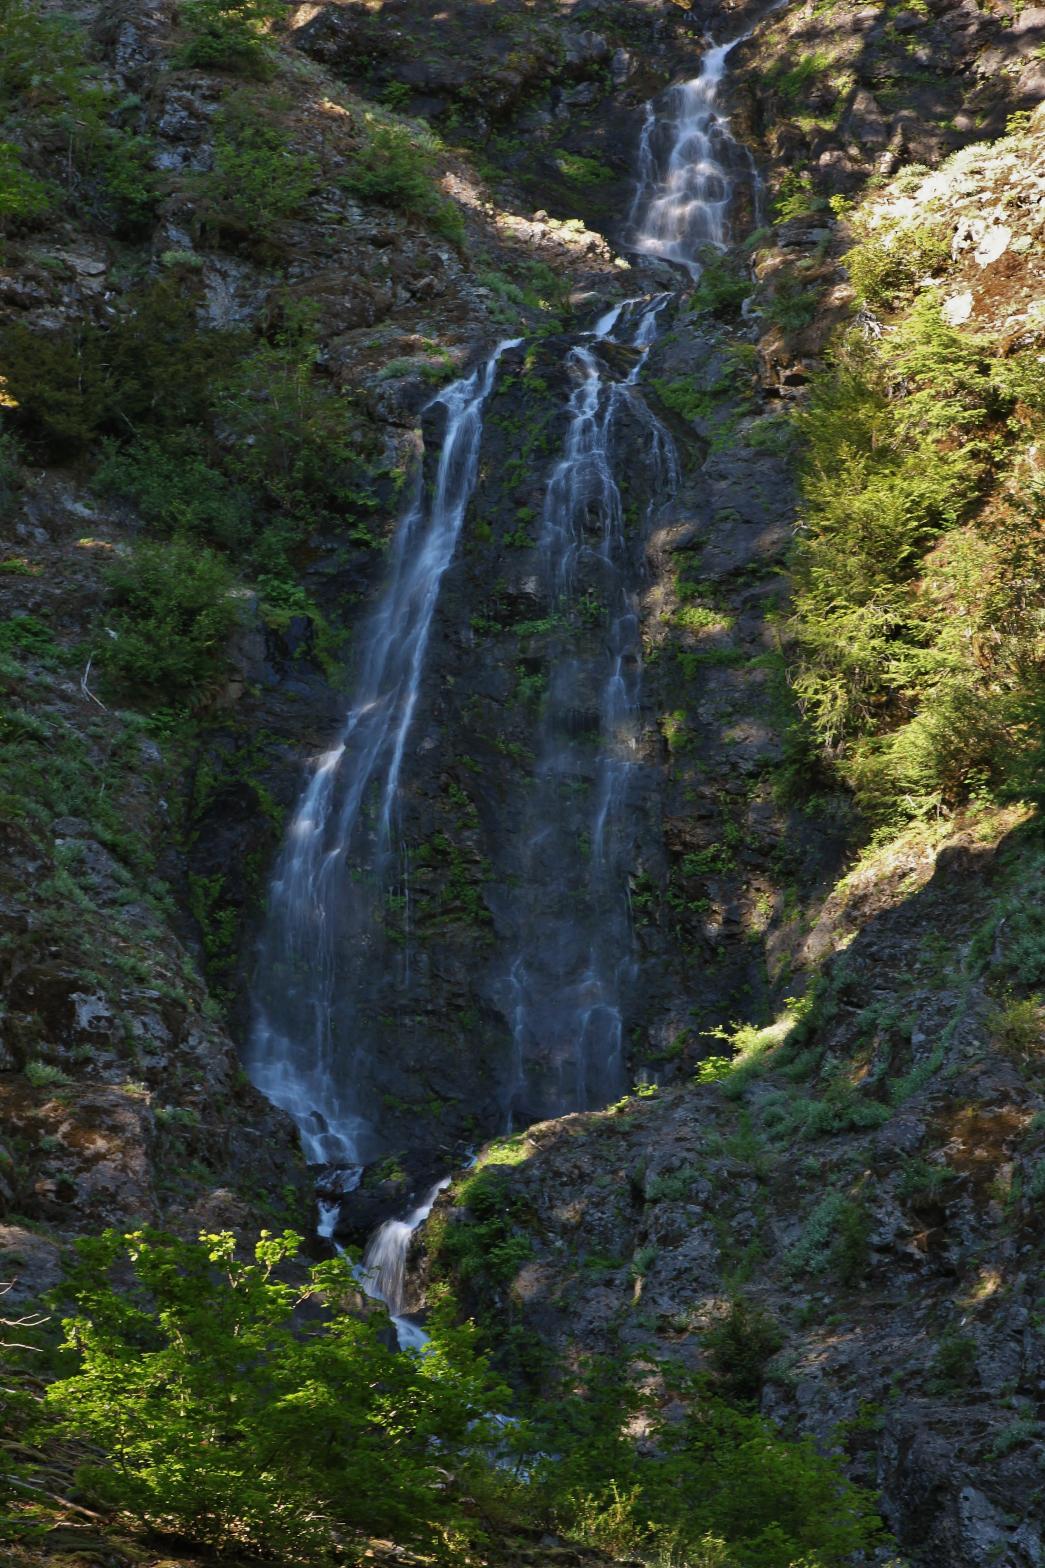 Bottom half of Tamqwilas Falls